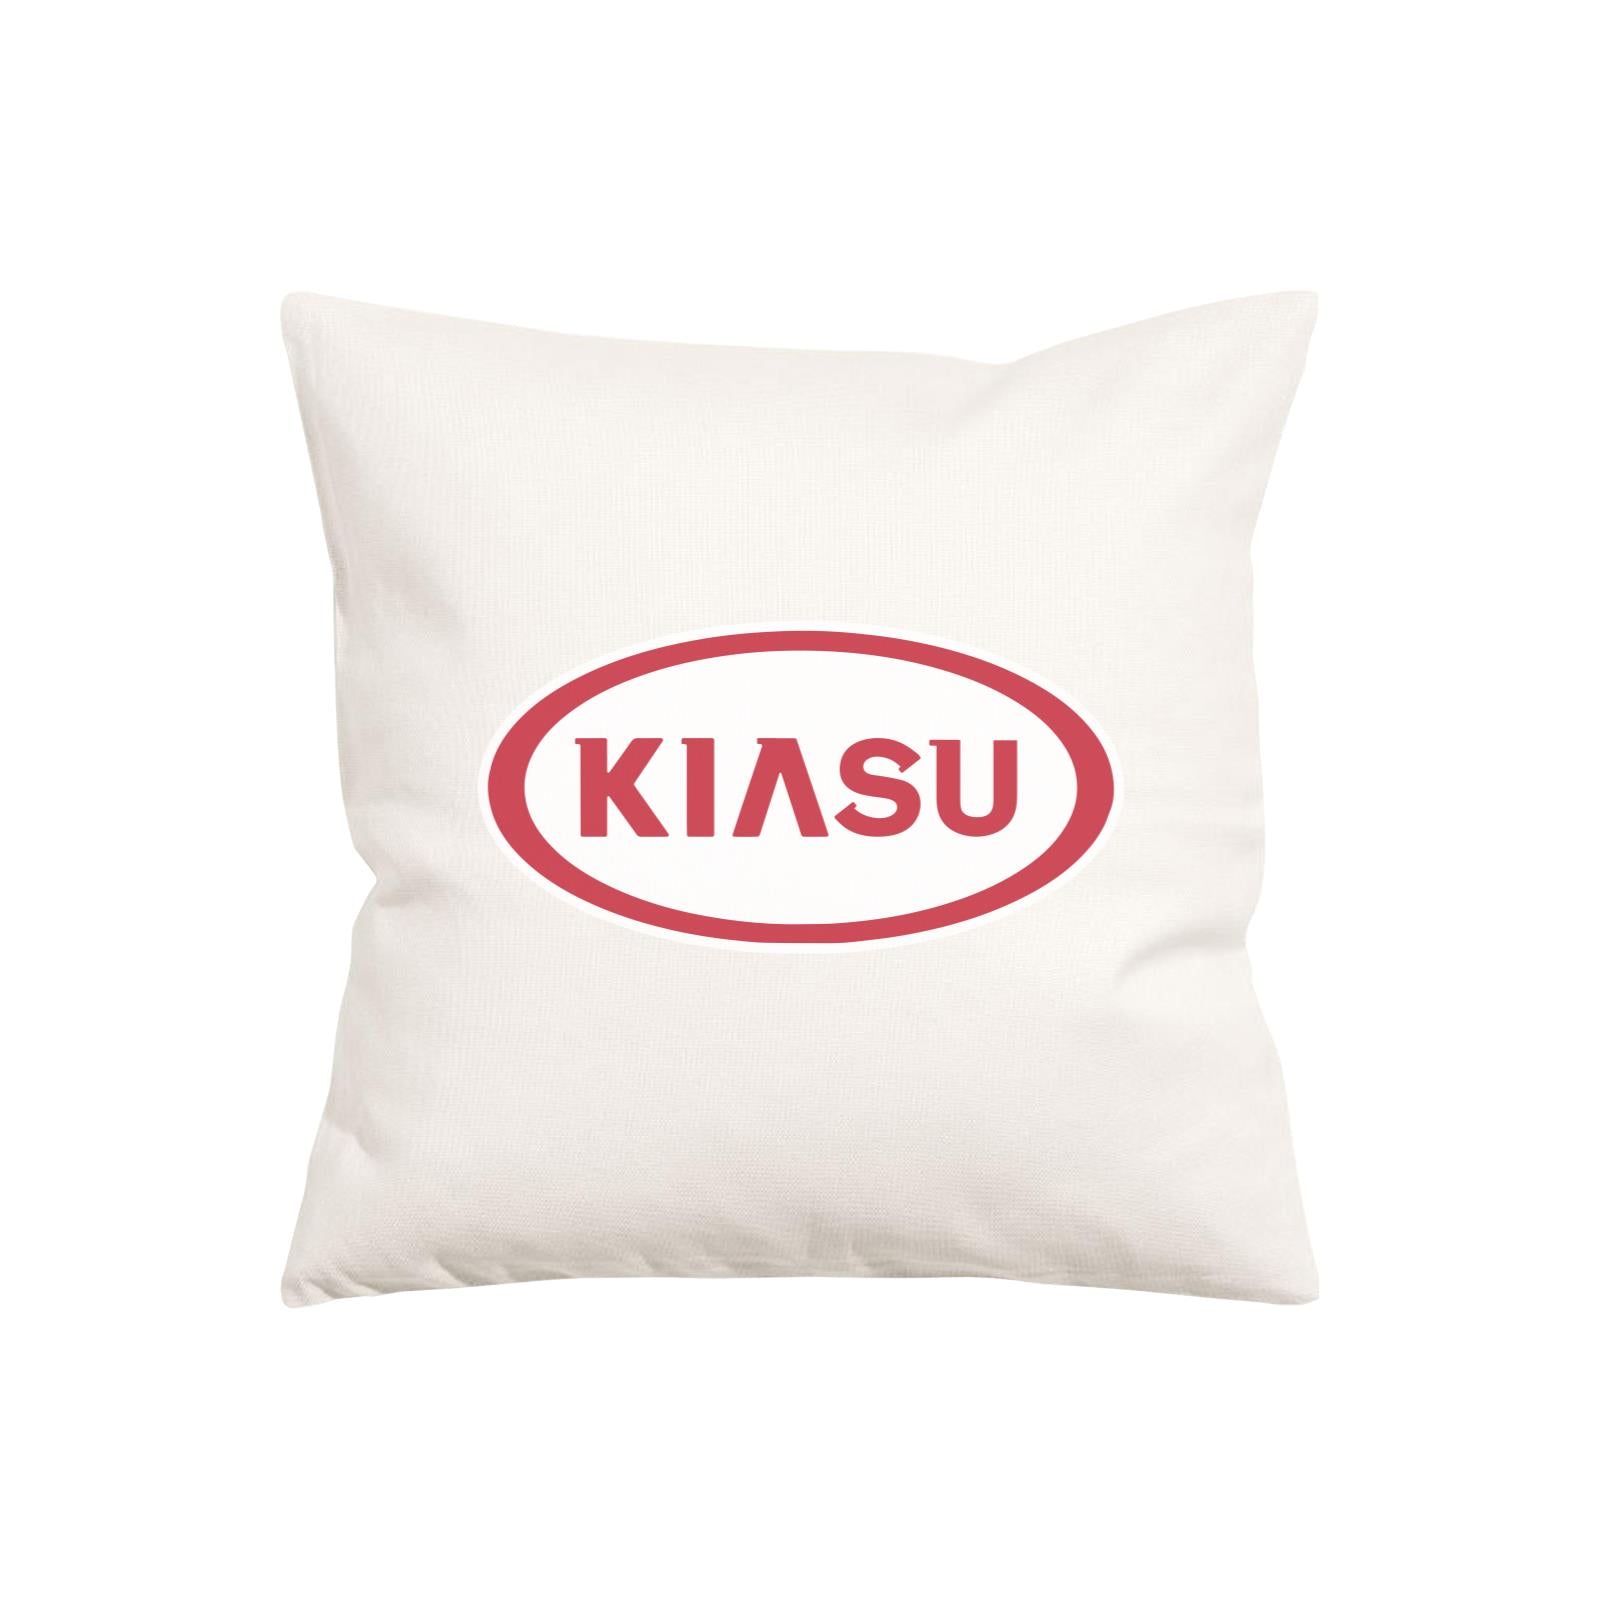 Slang Statement Kiasu Pillow Cushion